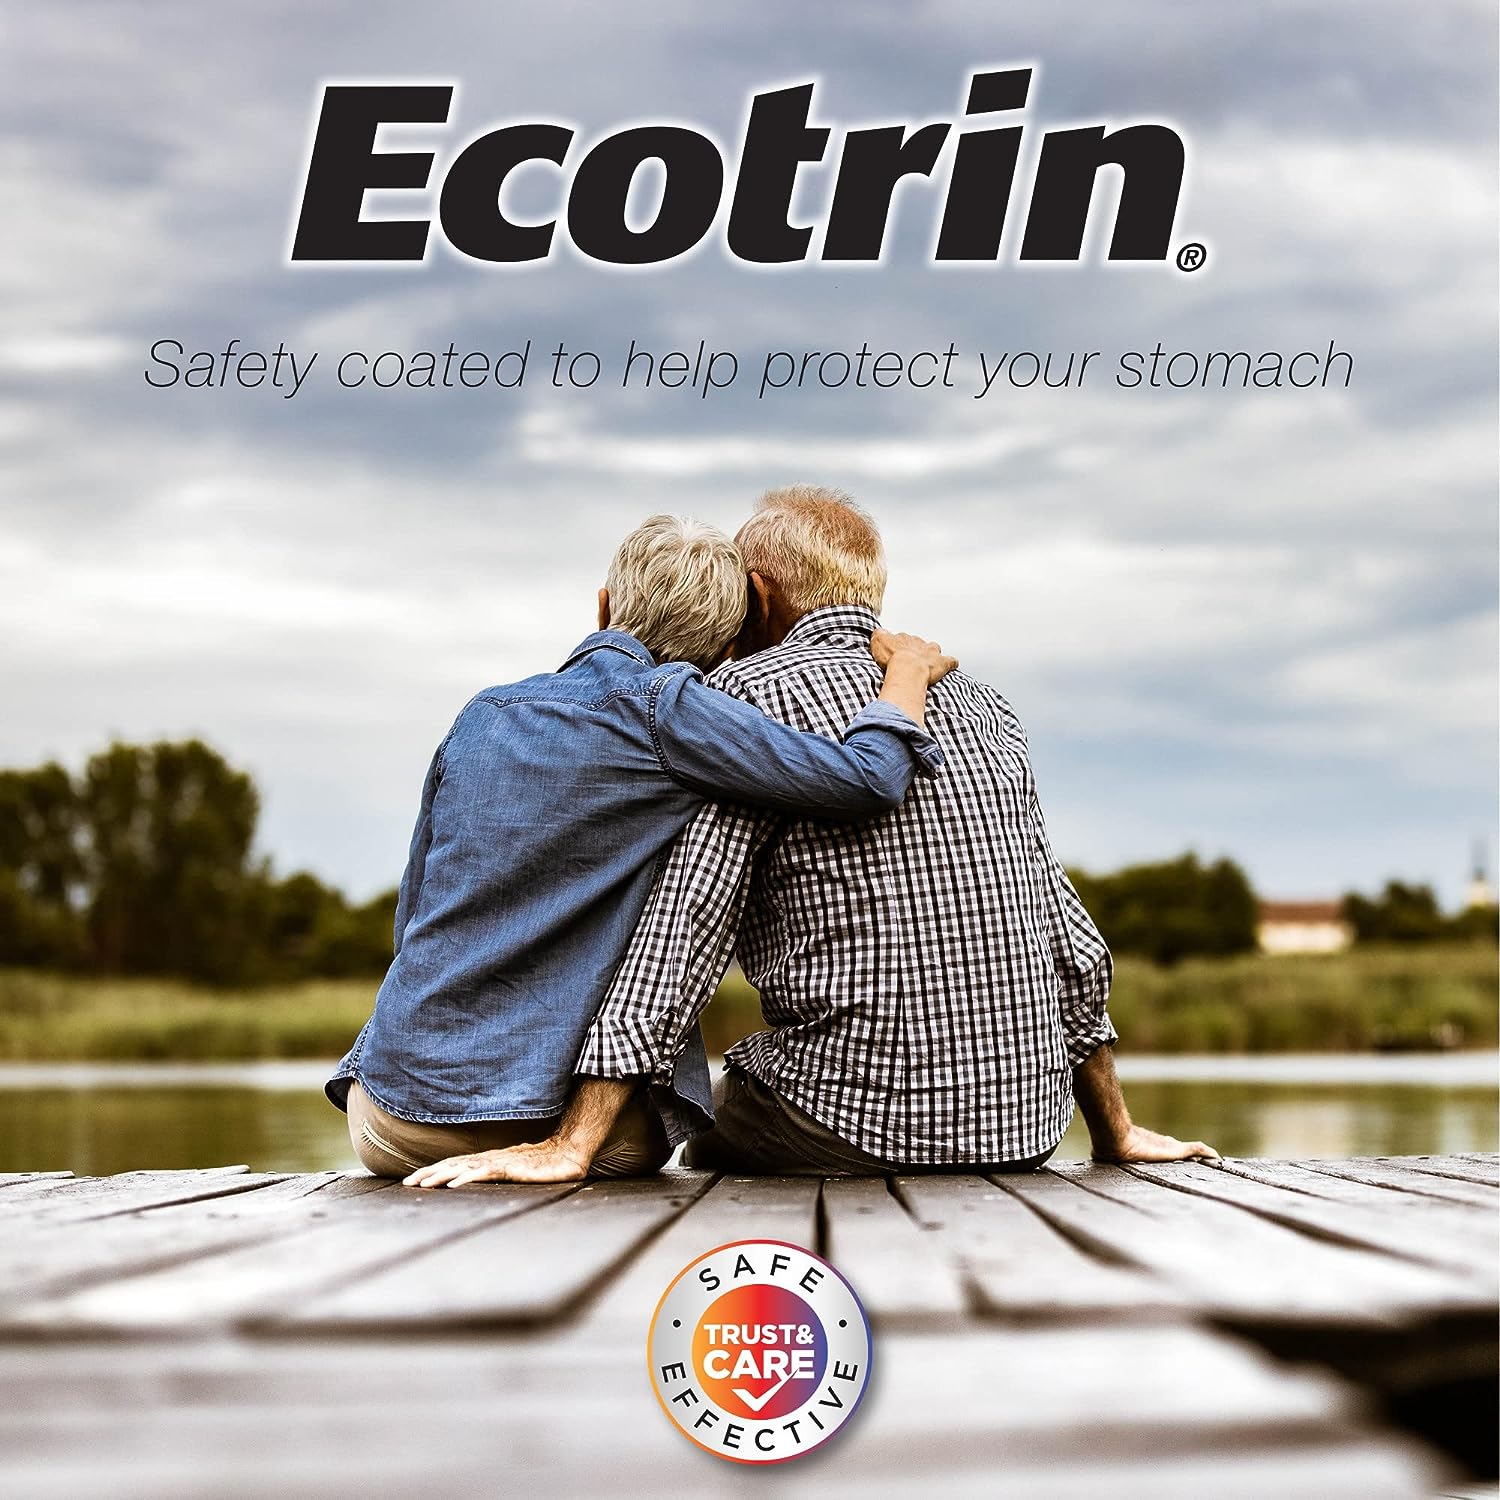 Ecotrin Regular Strength Aspirin, Arthritis Pain Relief, 325mg Regular